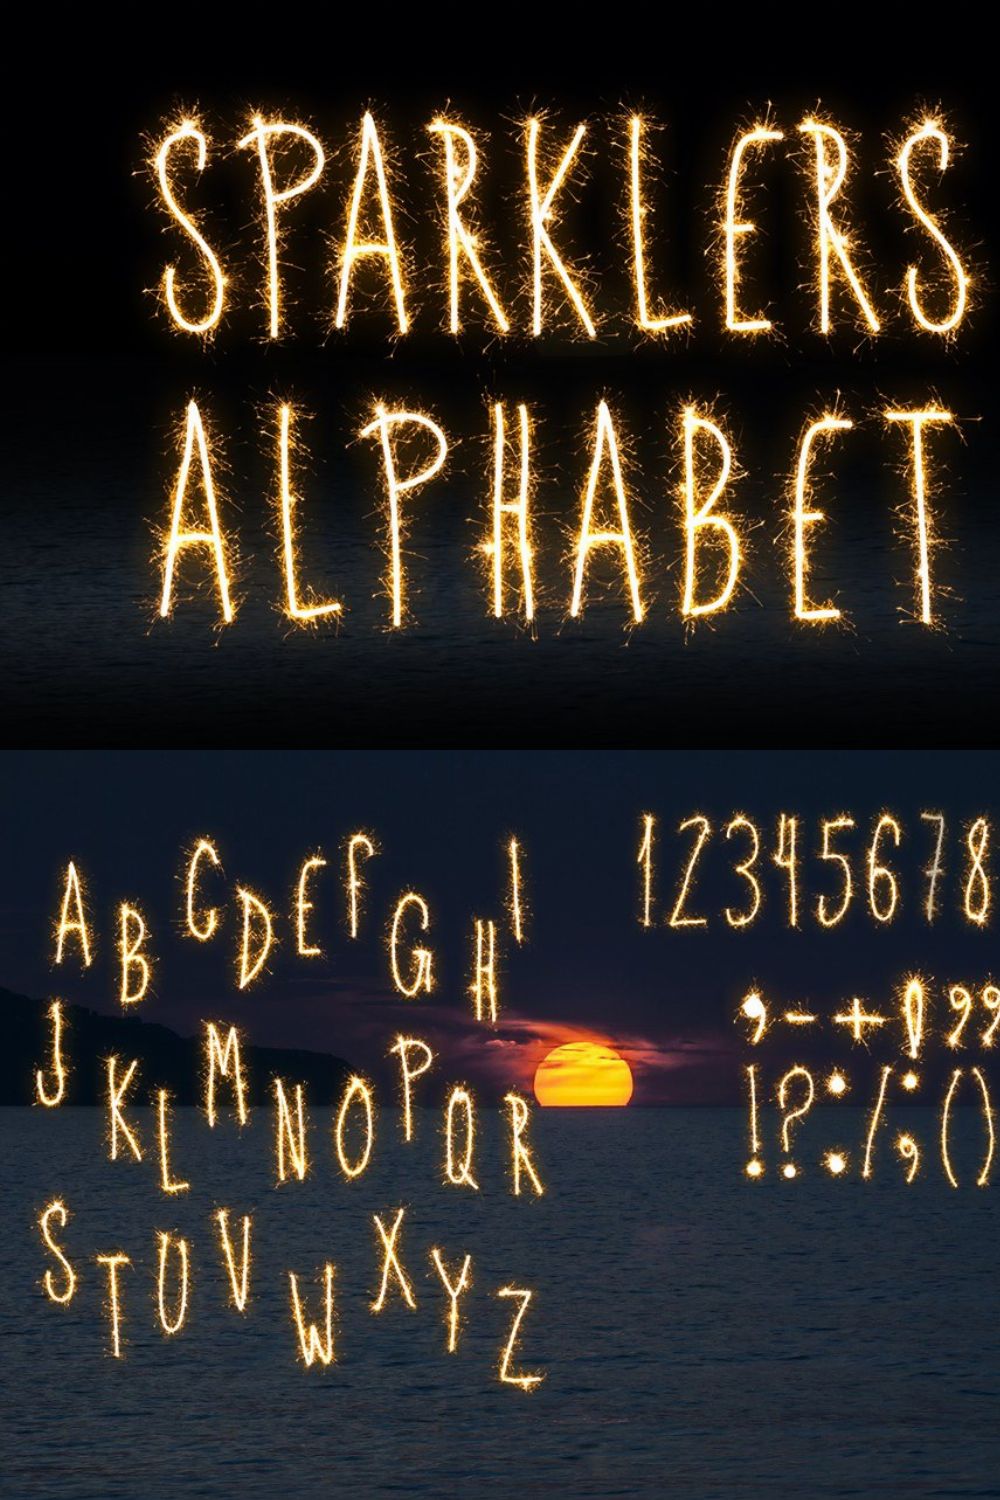 Sparklers Alphabet Overlays pinterest preview image.